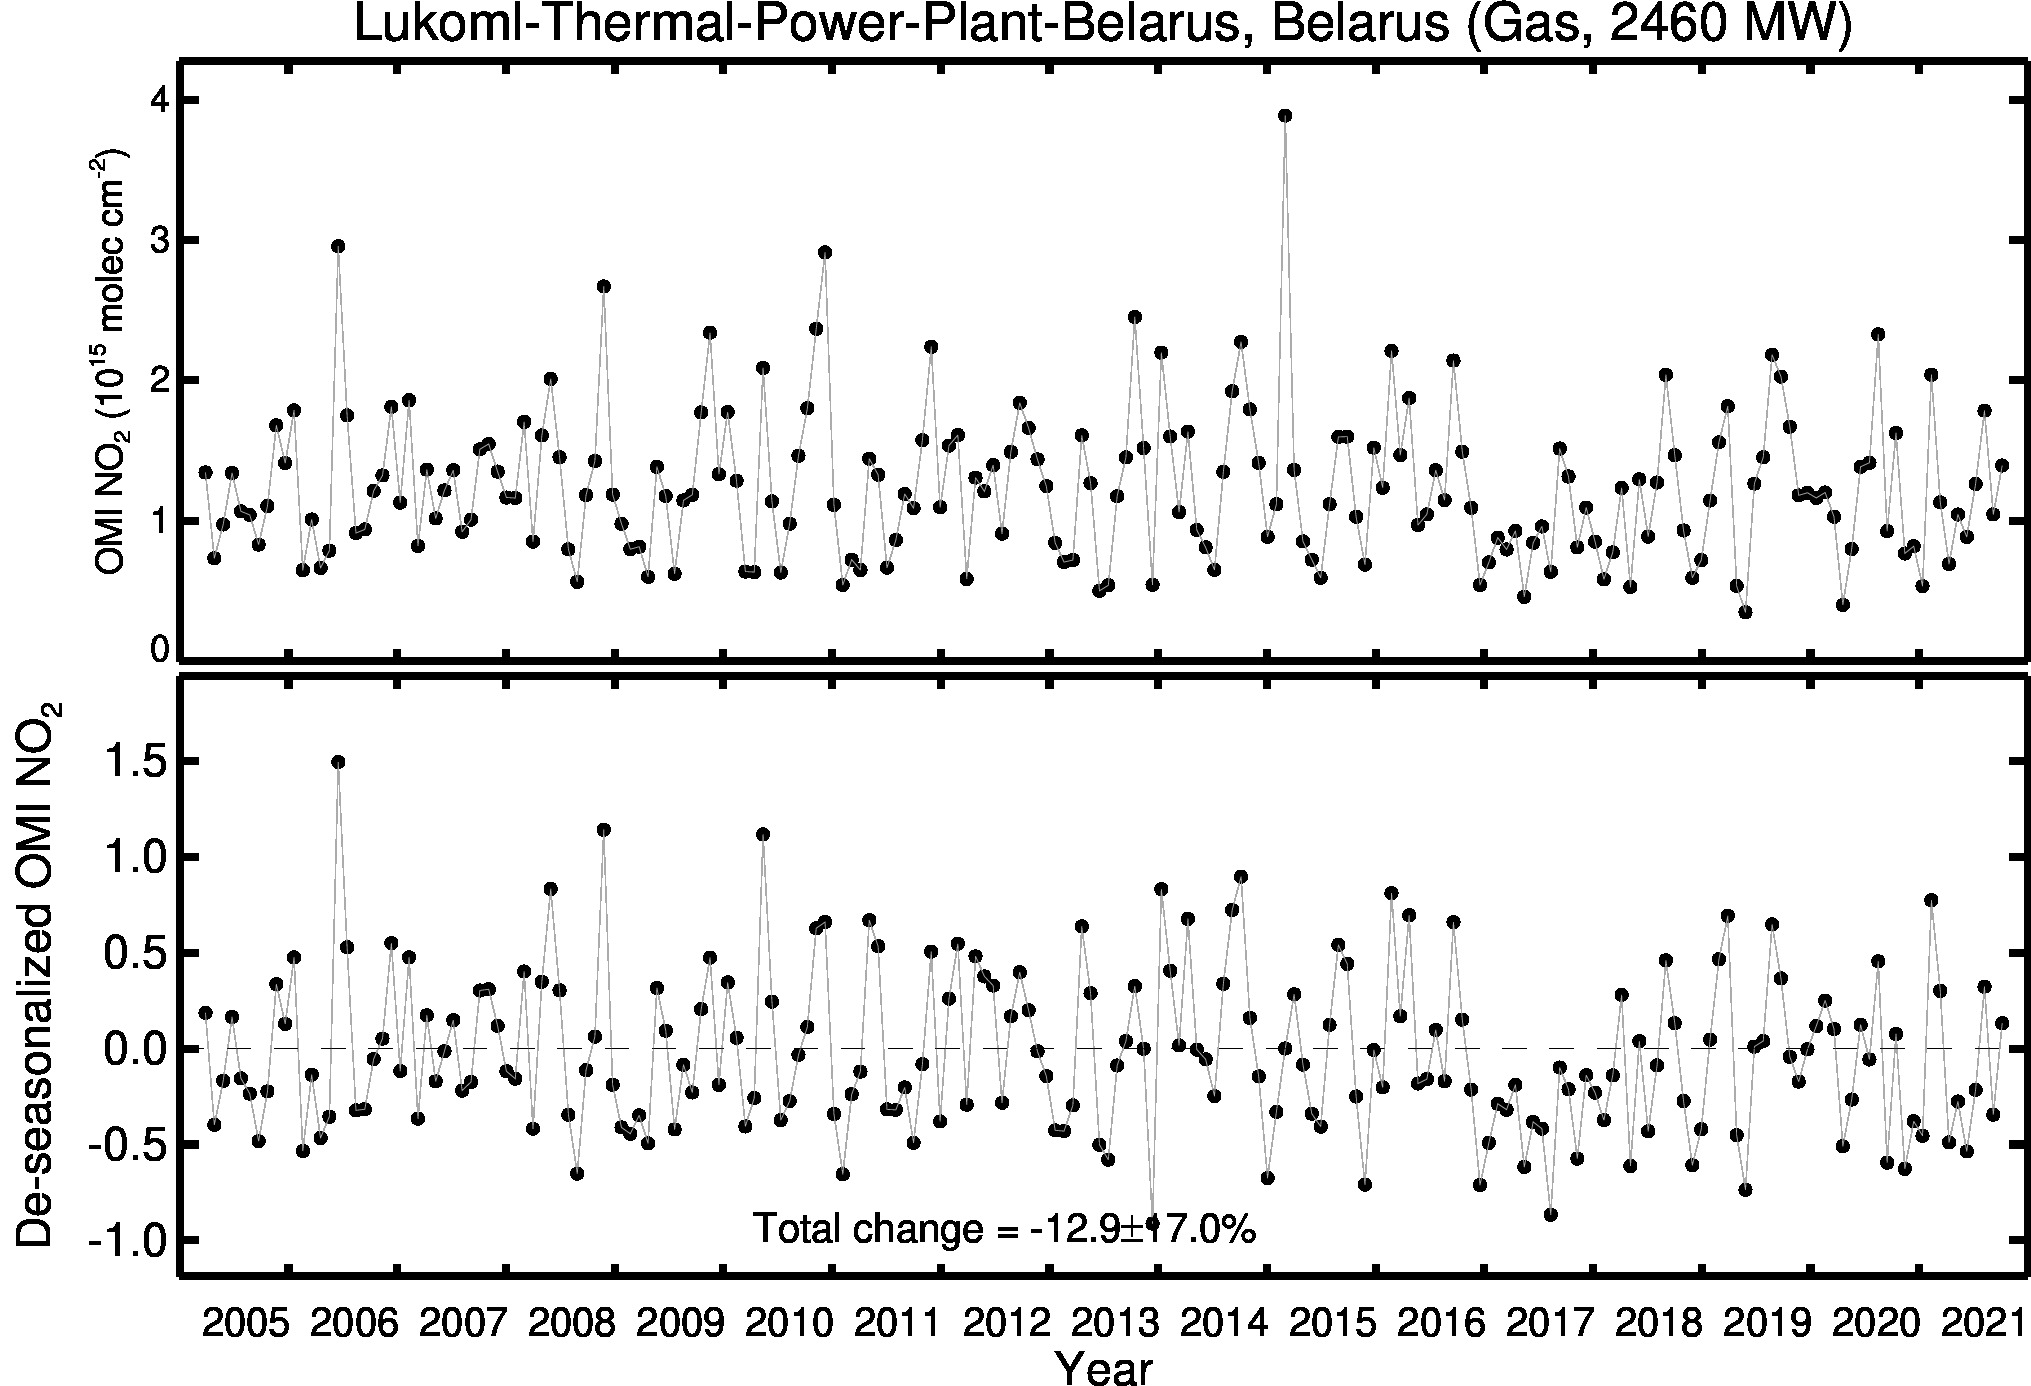 Lukoml Thermal Power Plant Belarus Line Plot 2005-2021